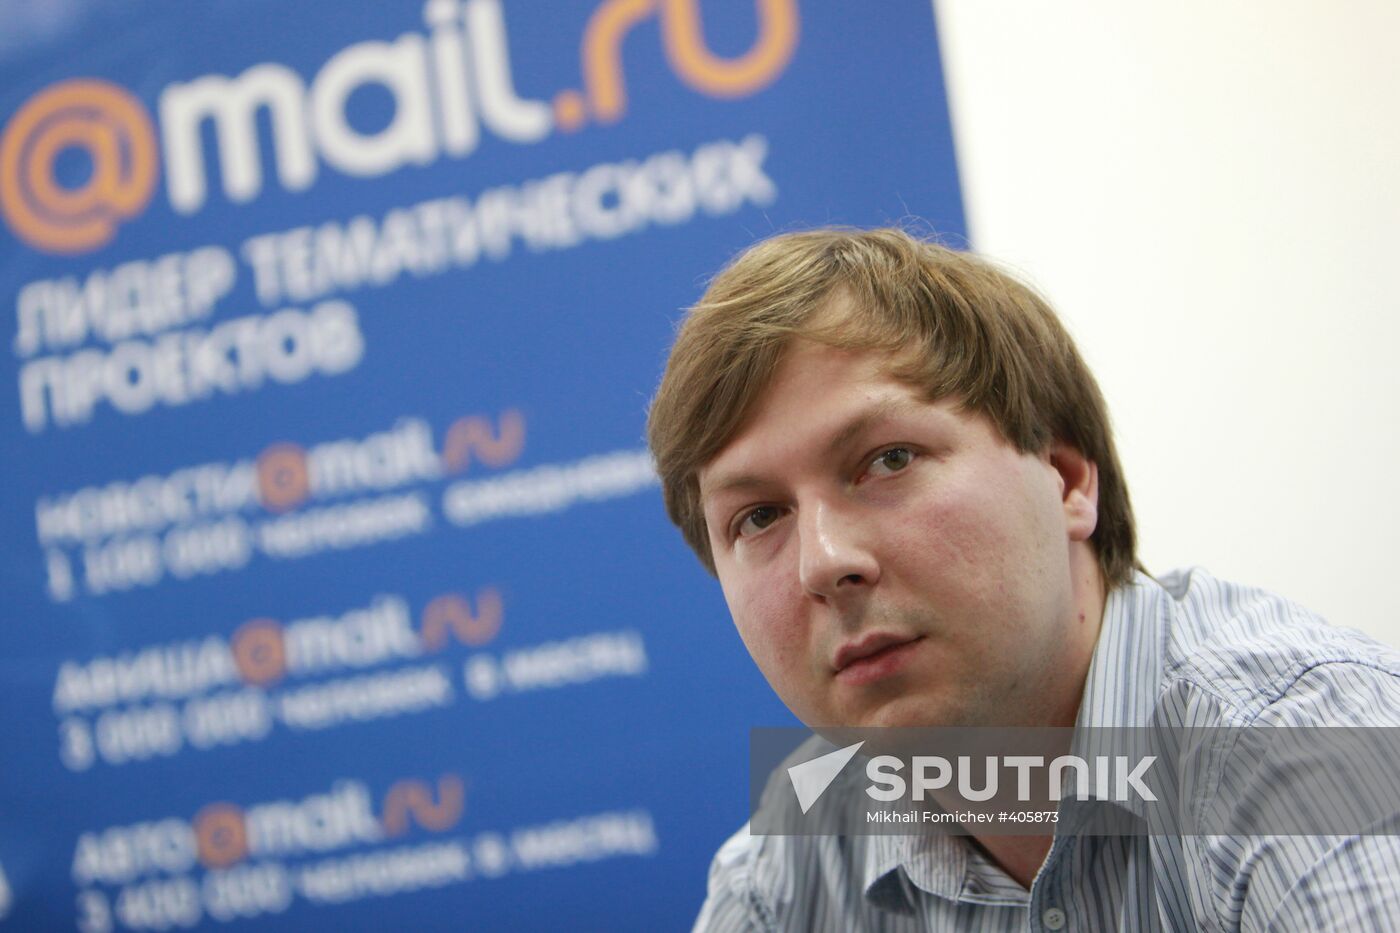 Dmitry Mishin, CEO of Mail.Ru